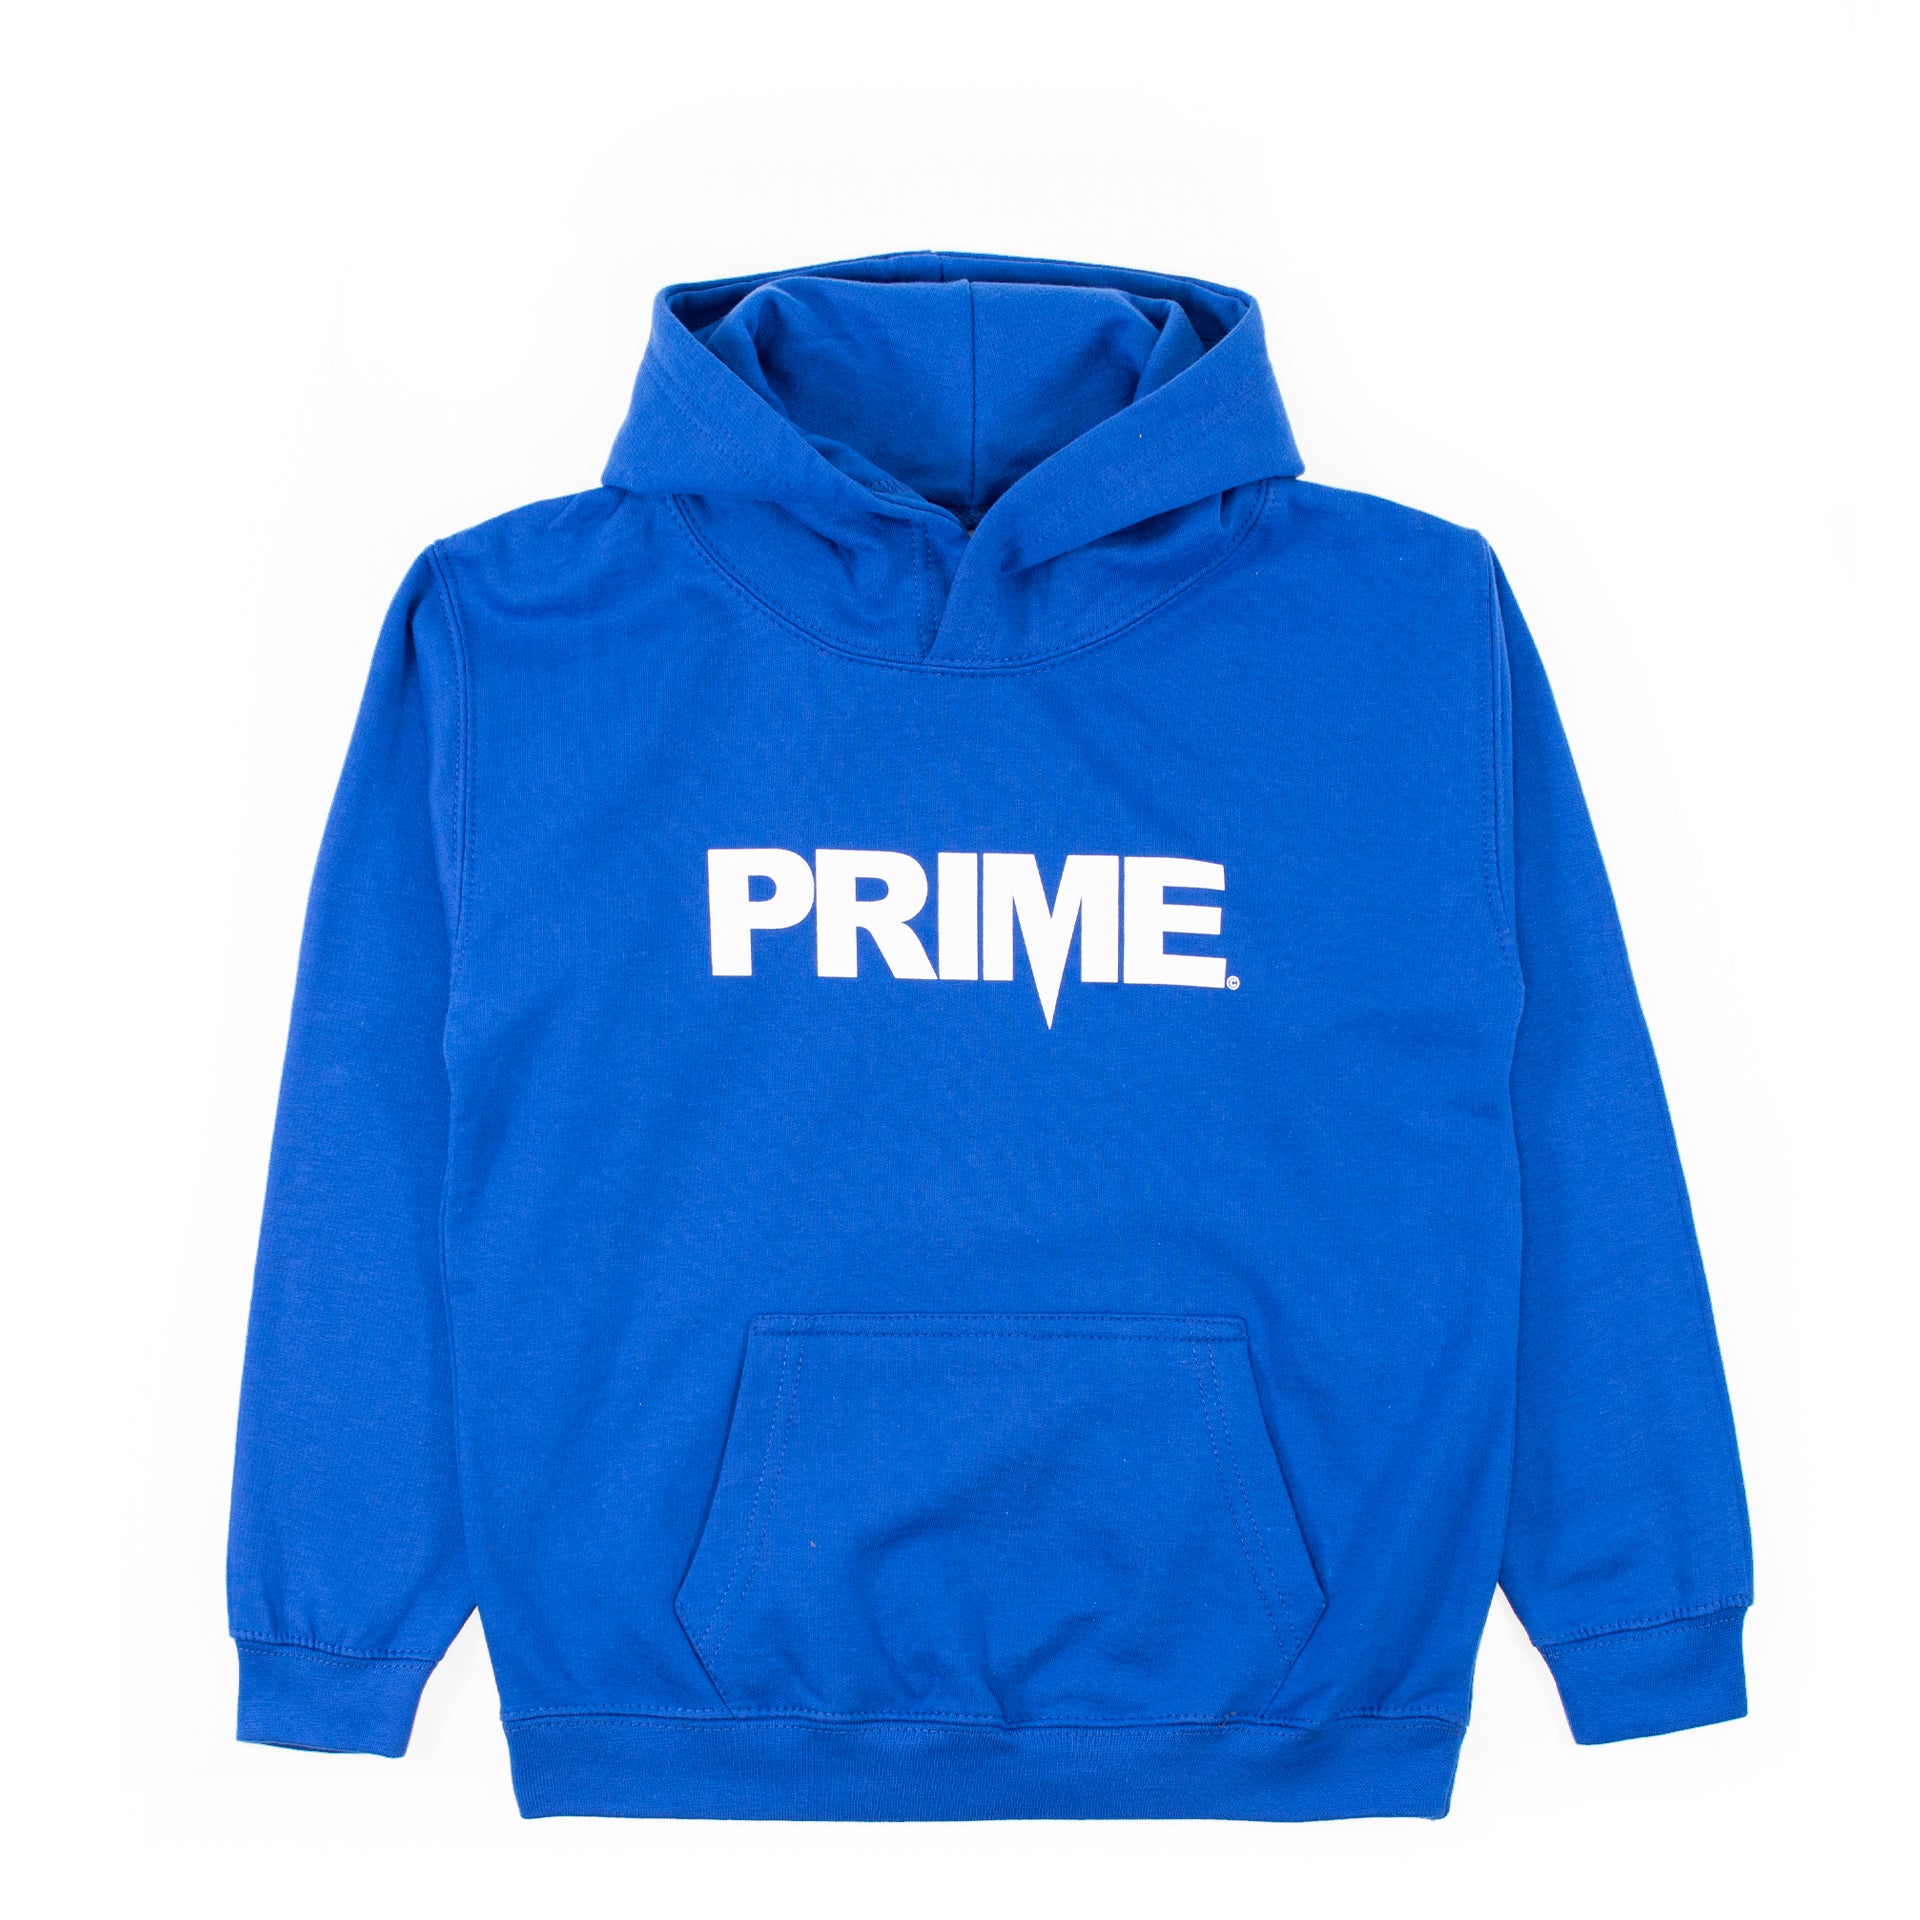 Prime Delux OG Logo Kids Hooded Sweat - Royal Blue / White - Prime Delux Store